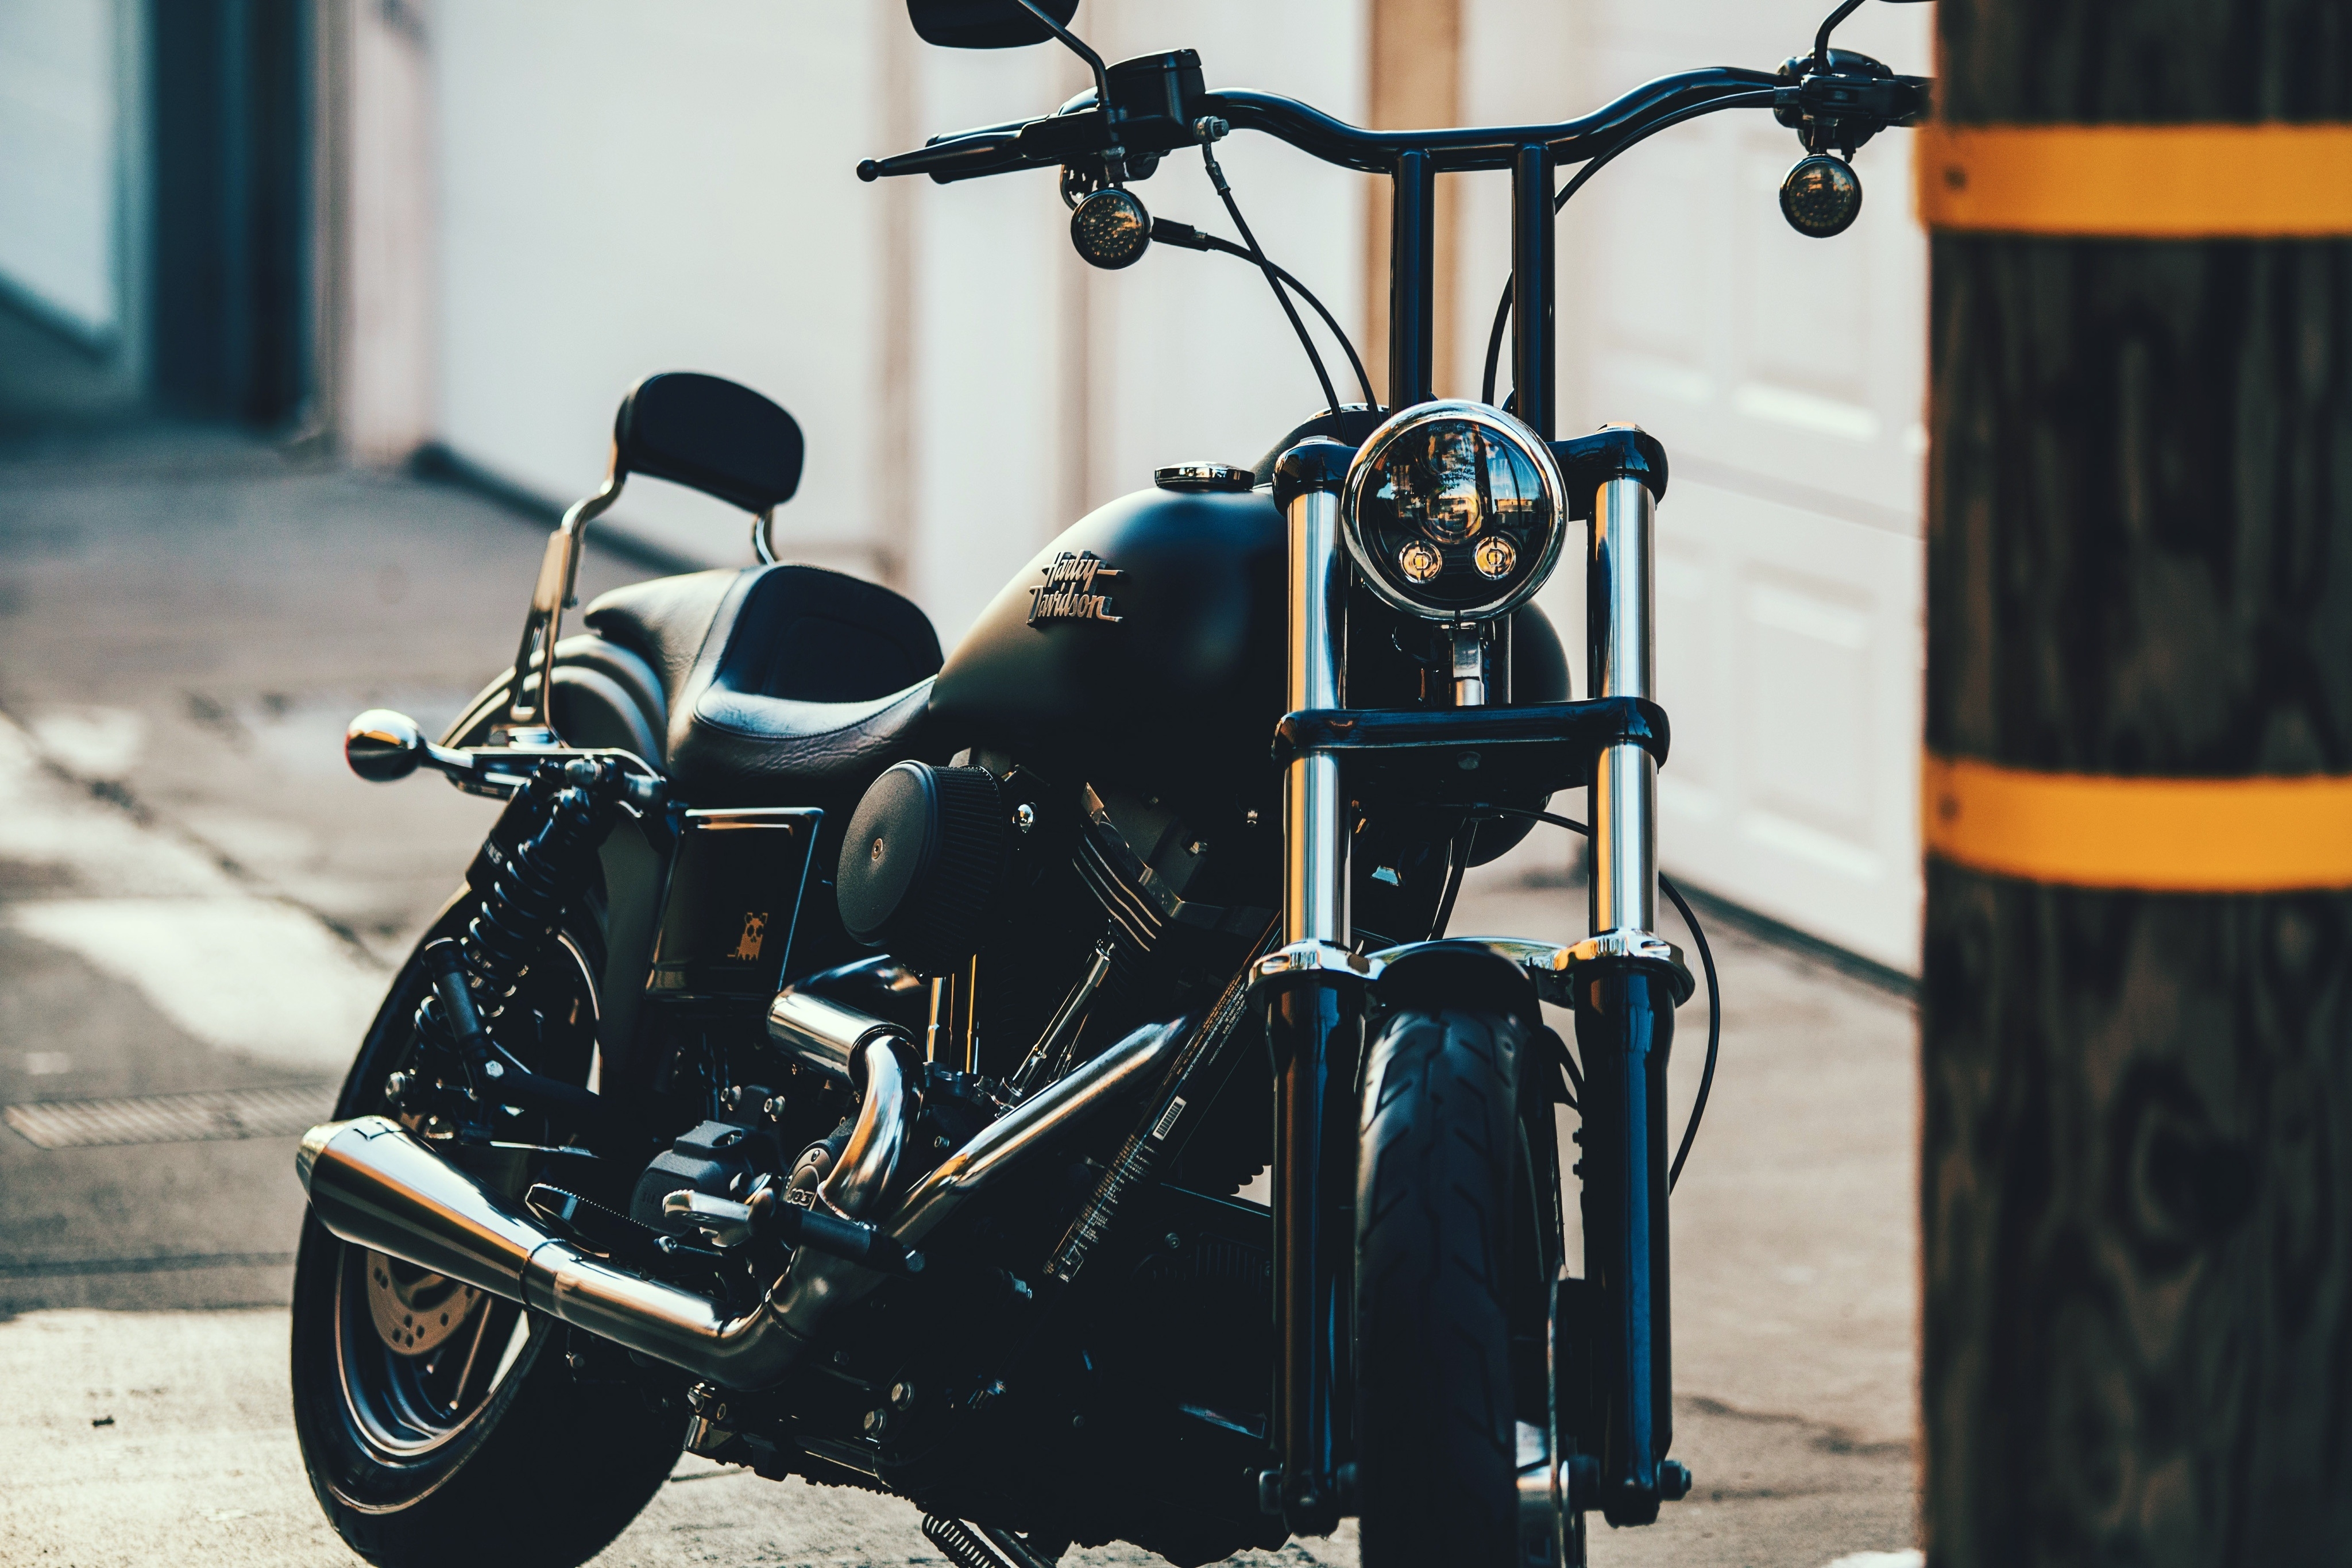 100+ Harley davidson photo - Download free images - Fonwall